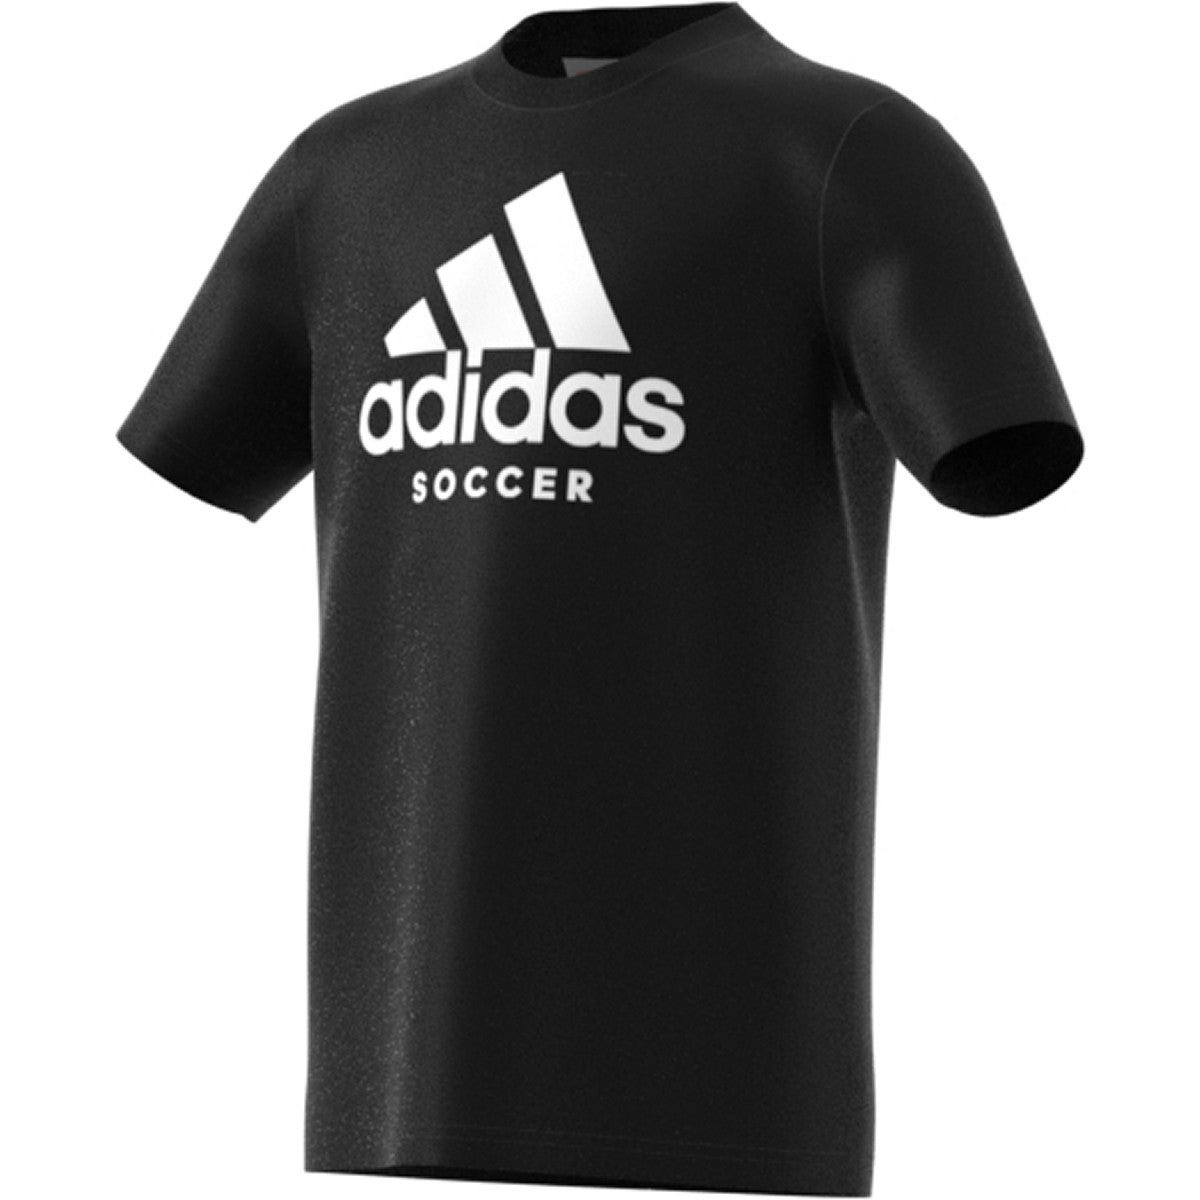 Adidas Soccer Logo Tee